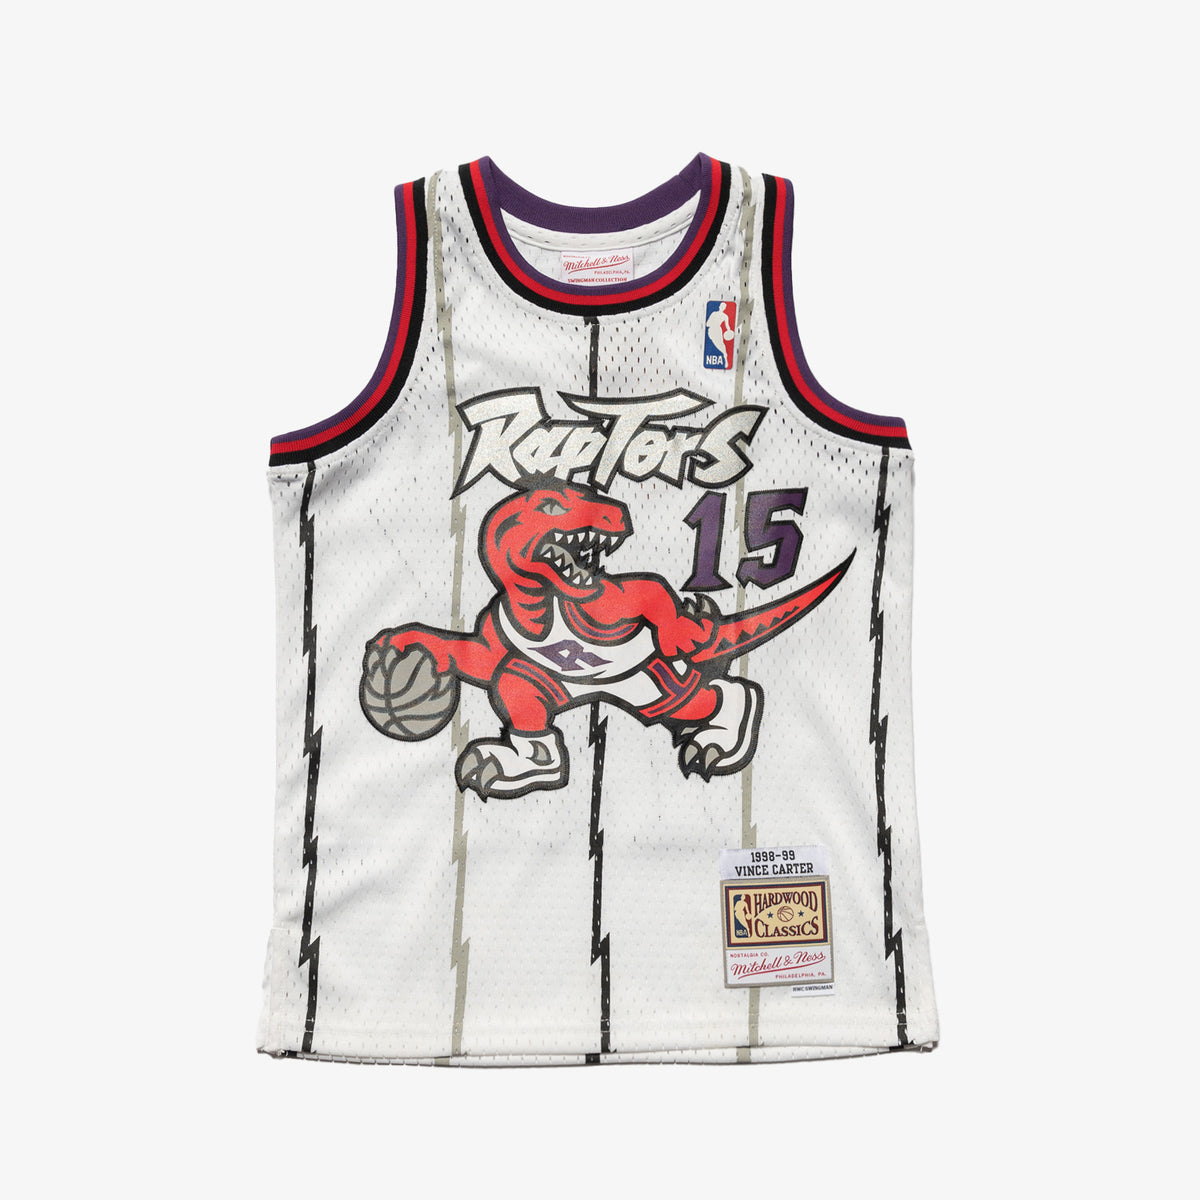 Reebok Toronto Raptors Vince carter jersey youth Sz M vintage nba